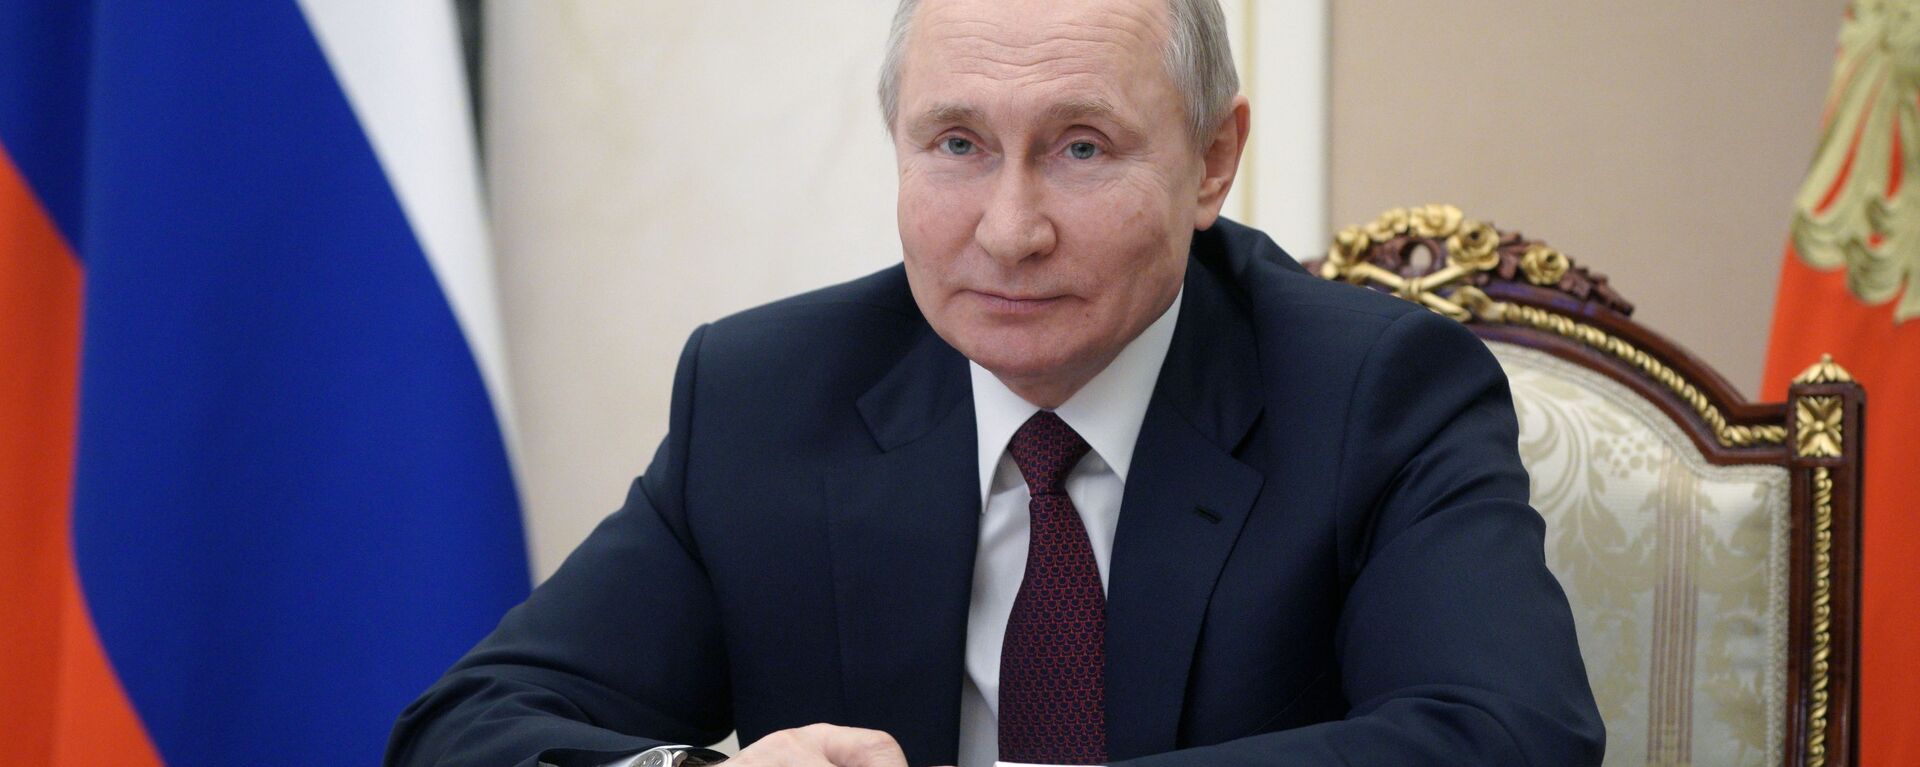 Predsednik Rusije Vladimir Putin - Sputnik Srbija, 1920, 26.03.2021